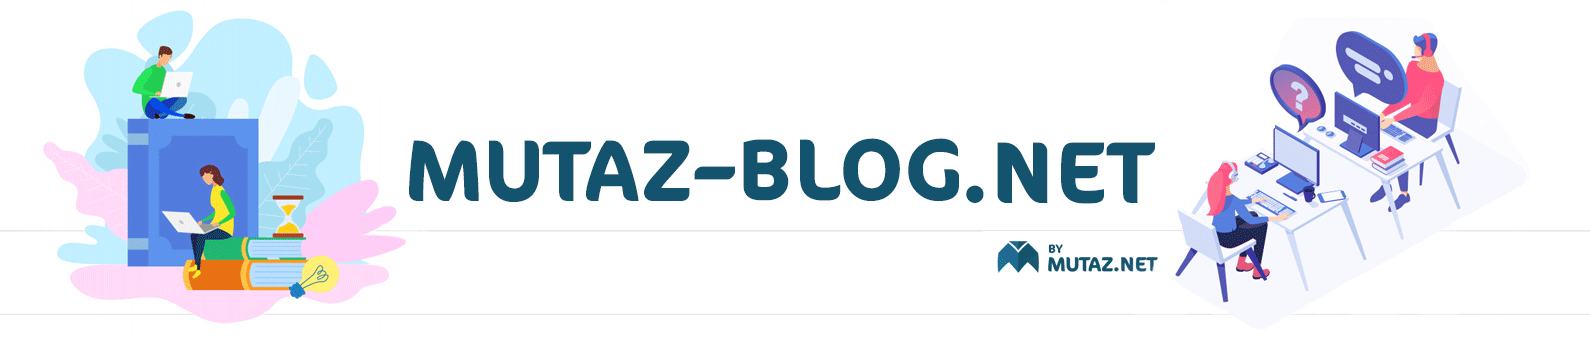 mutaz-blog-cover-1